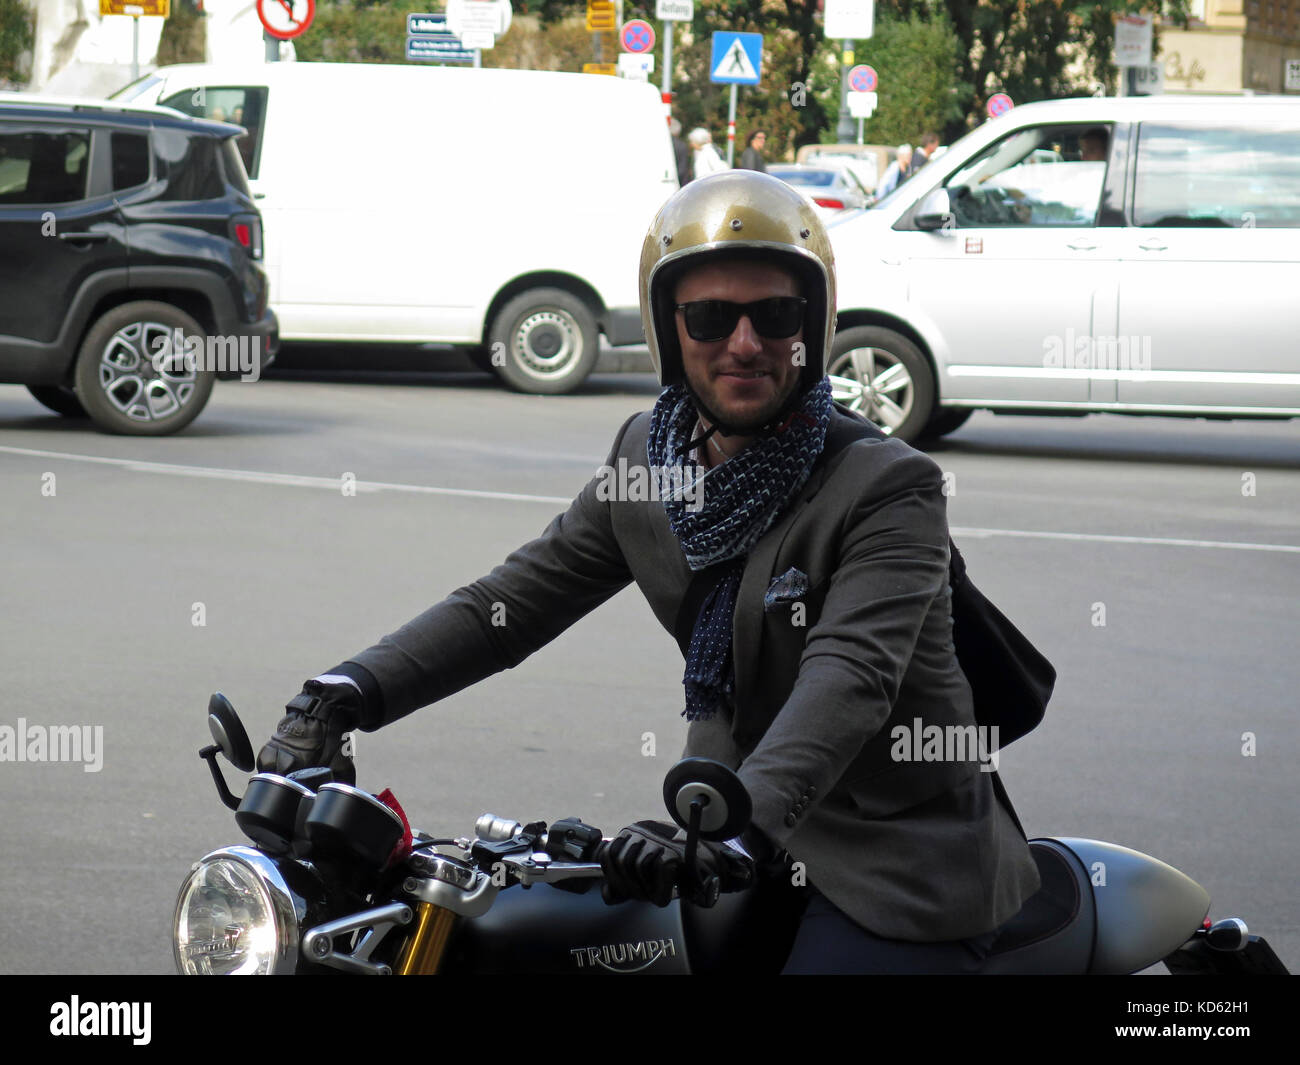 Motorcyclist, Vienna Stock Photo